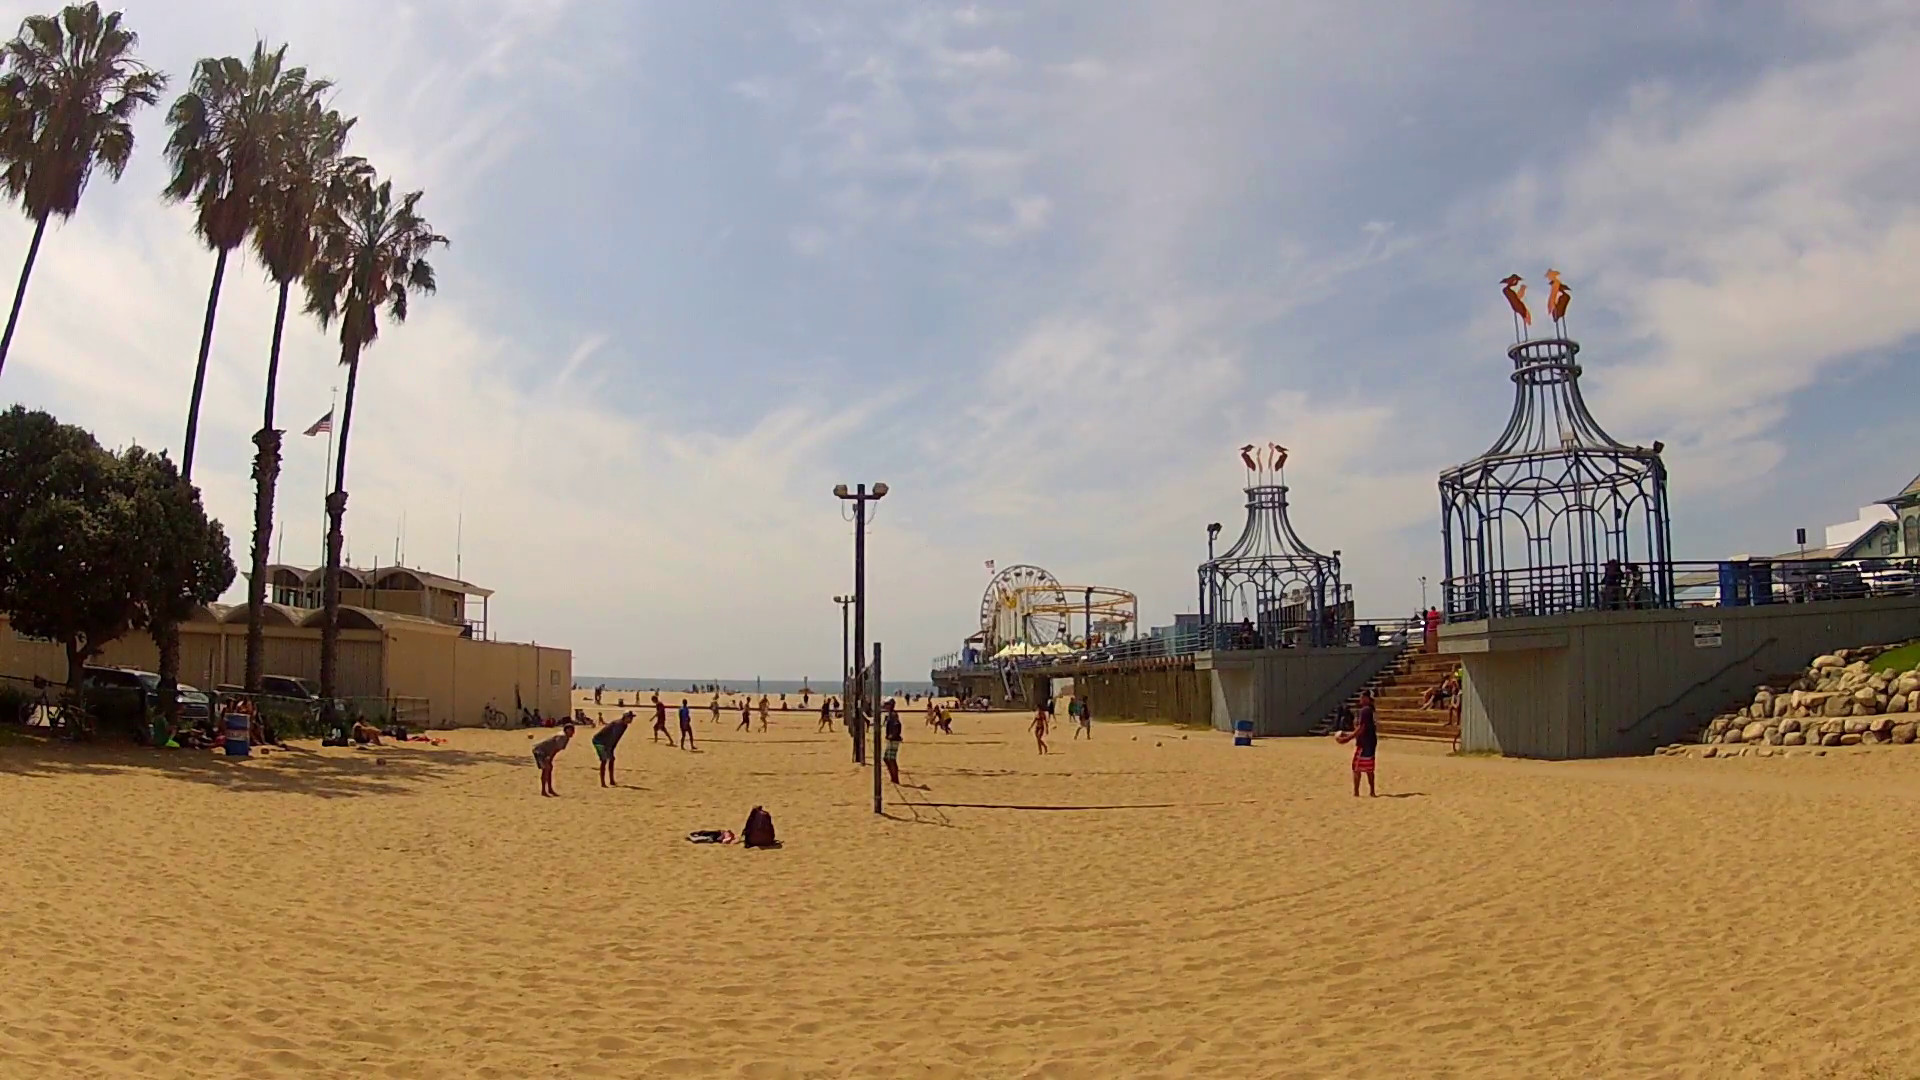 1920x1080 Beach Volleyball Games By Santa Monica Pier- Santa Monica CA Stock Video  Footage - VideoBlocks